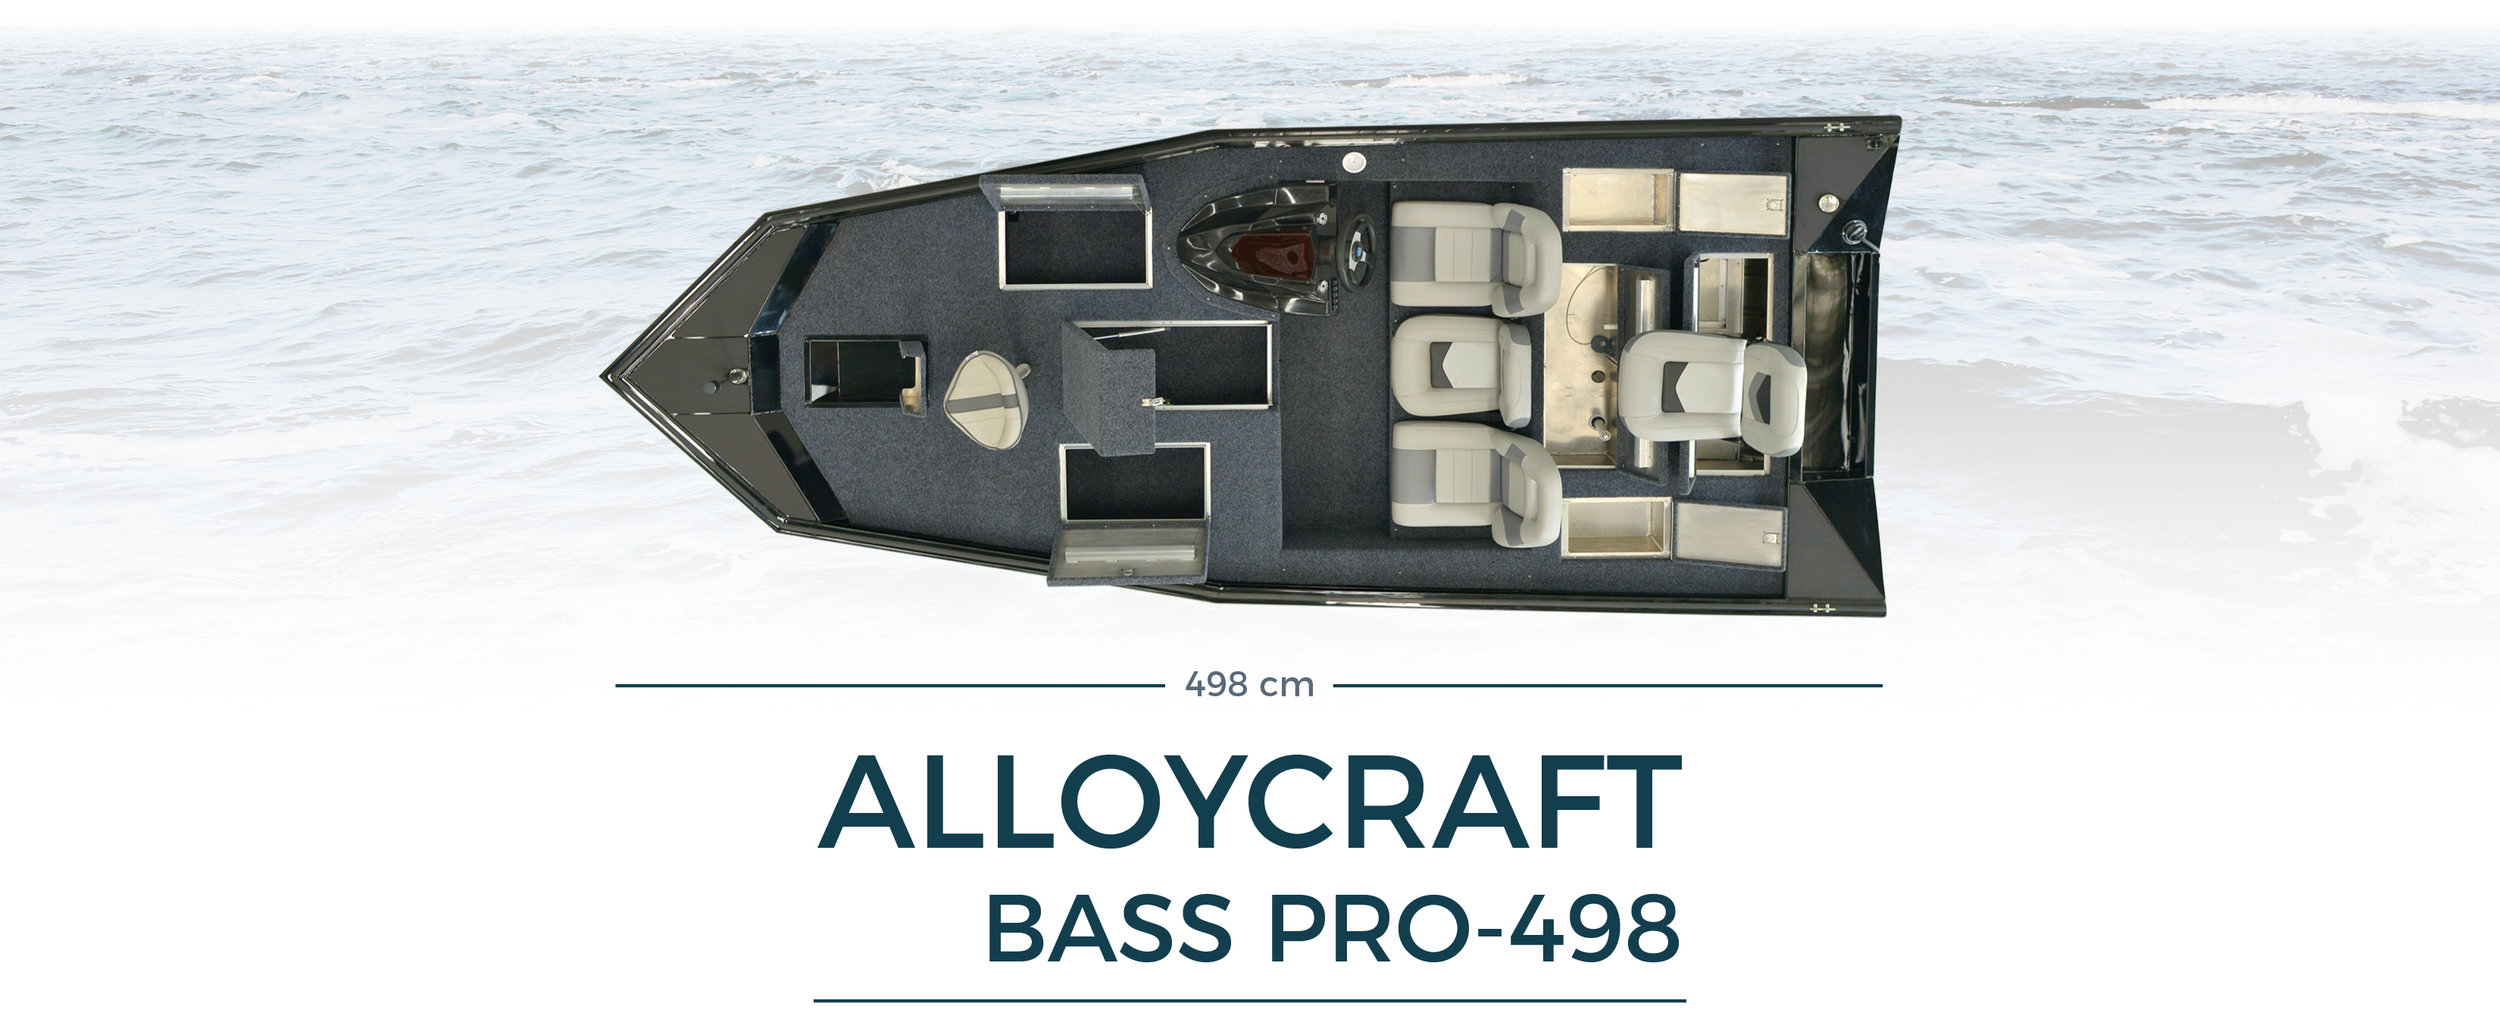 Båt Alloycraft BASS PRO 498